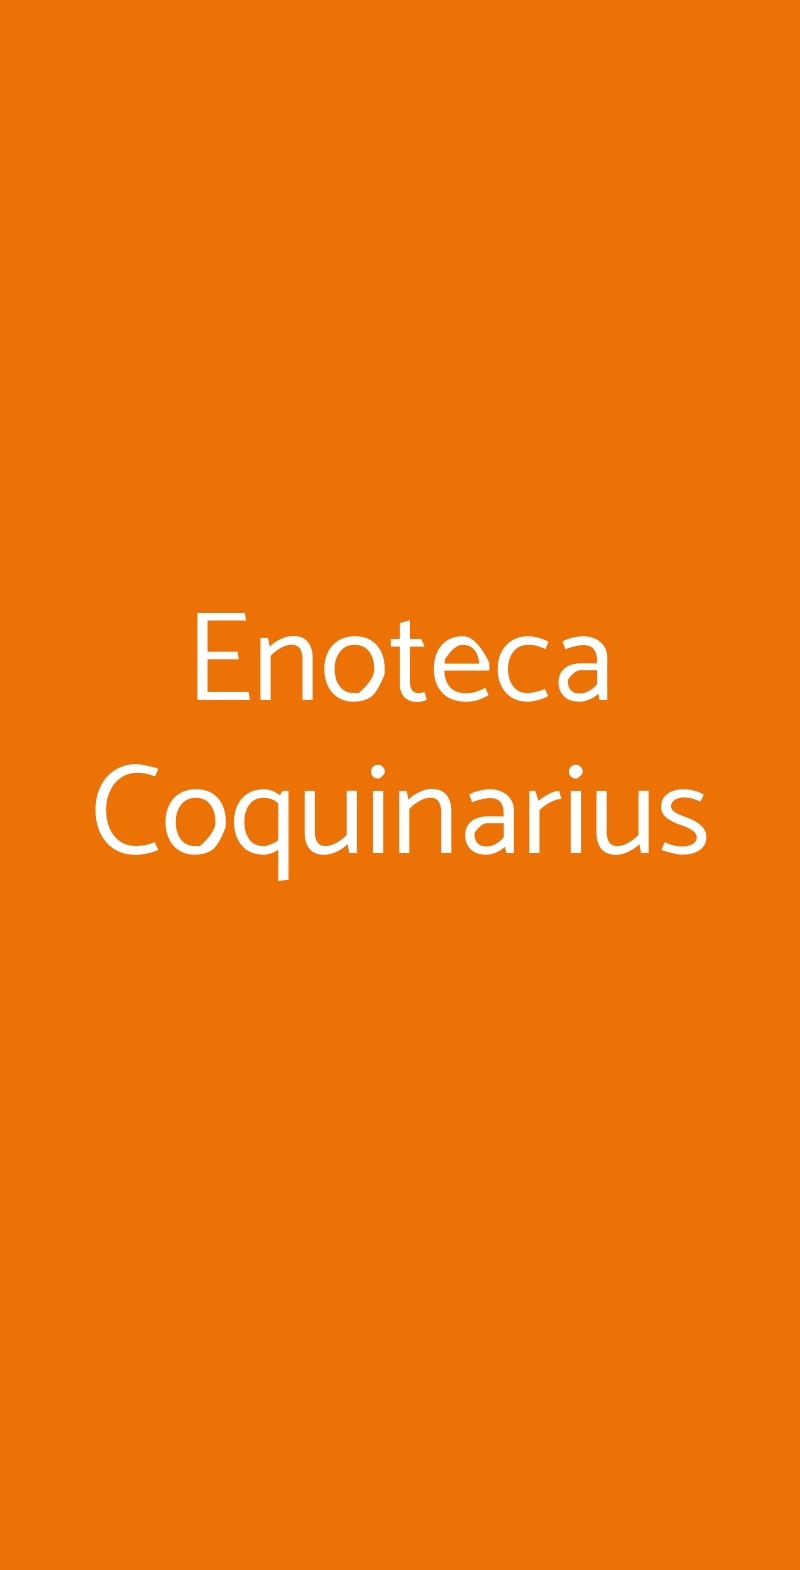 Enoteca Coquinarius Firenze menù 1 pagina